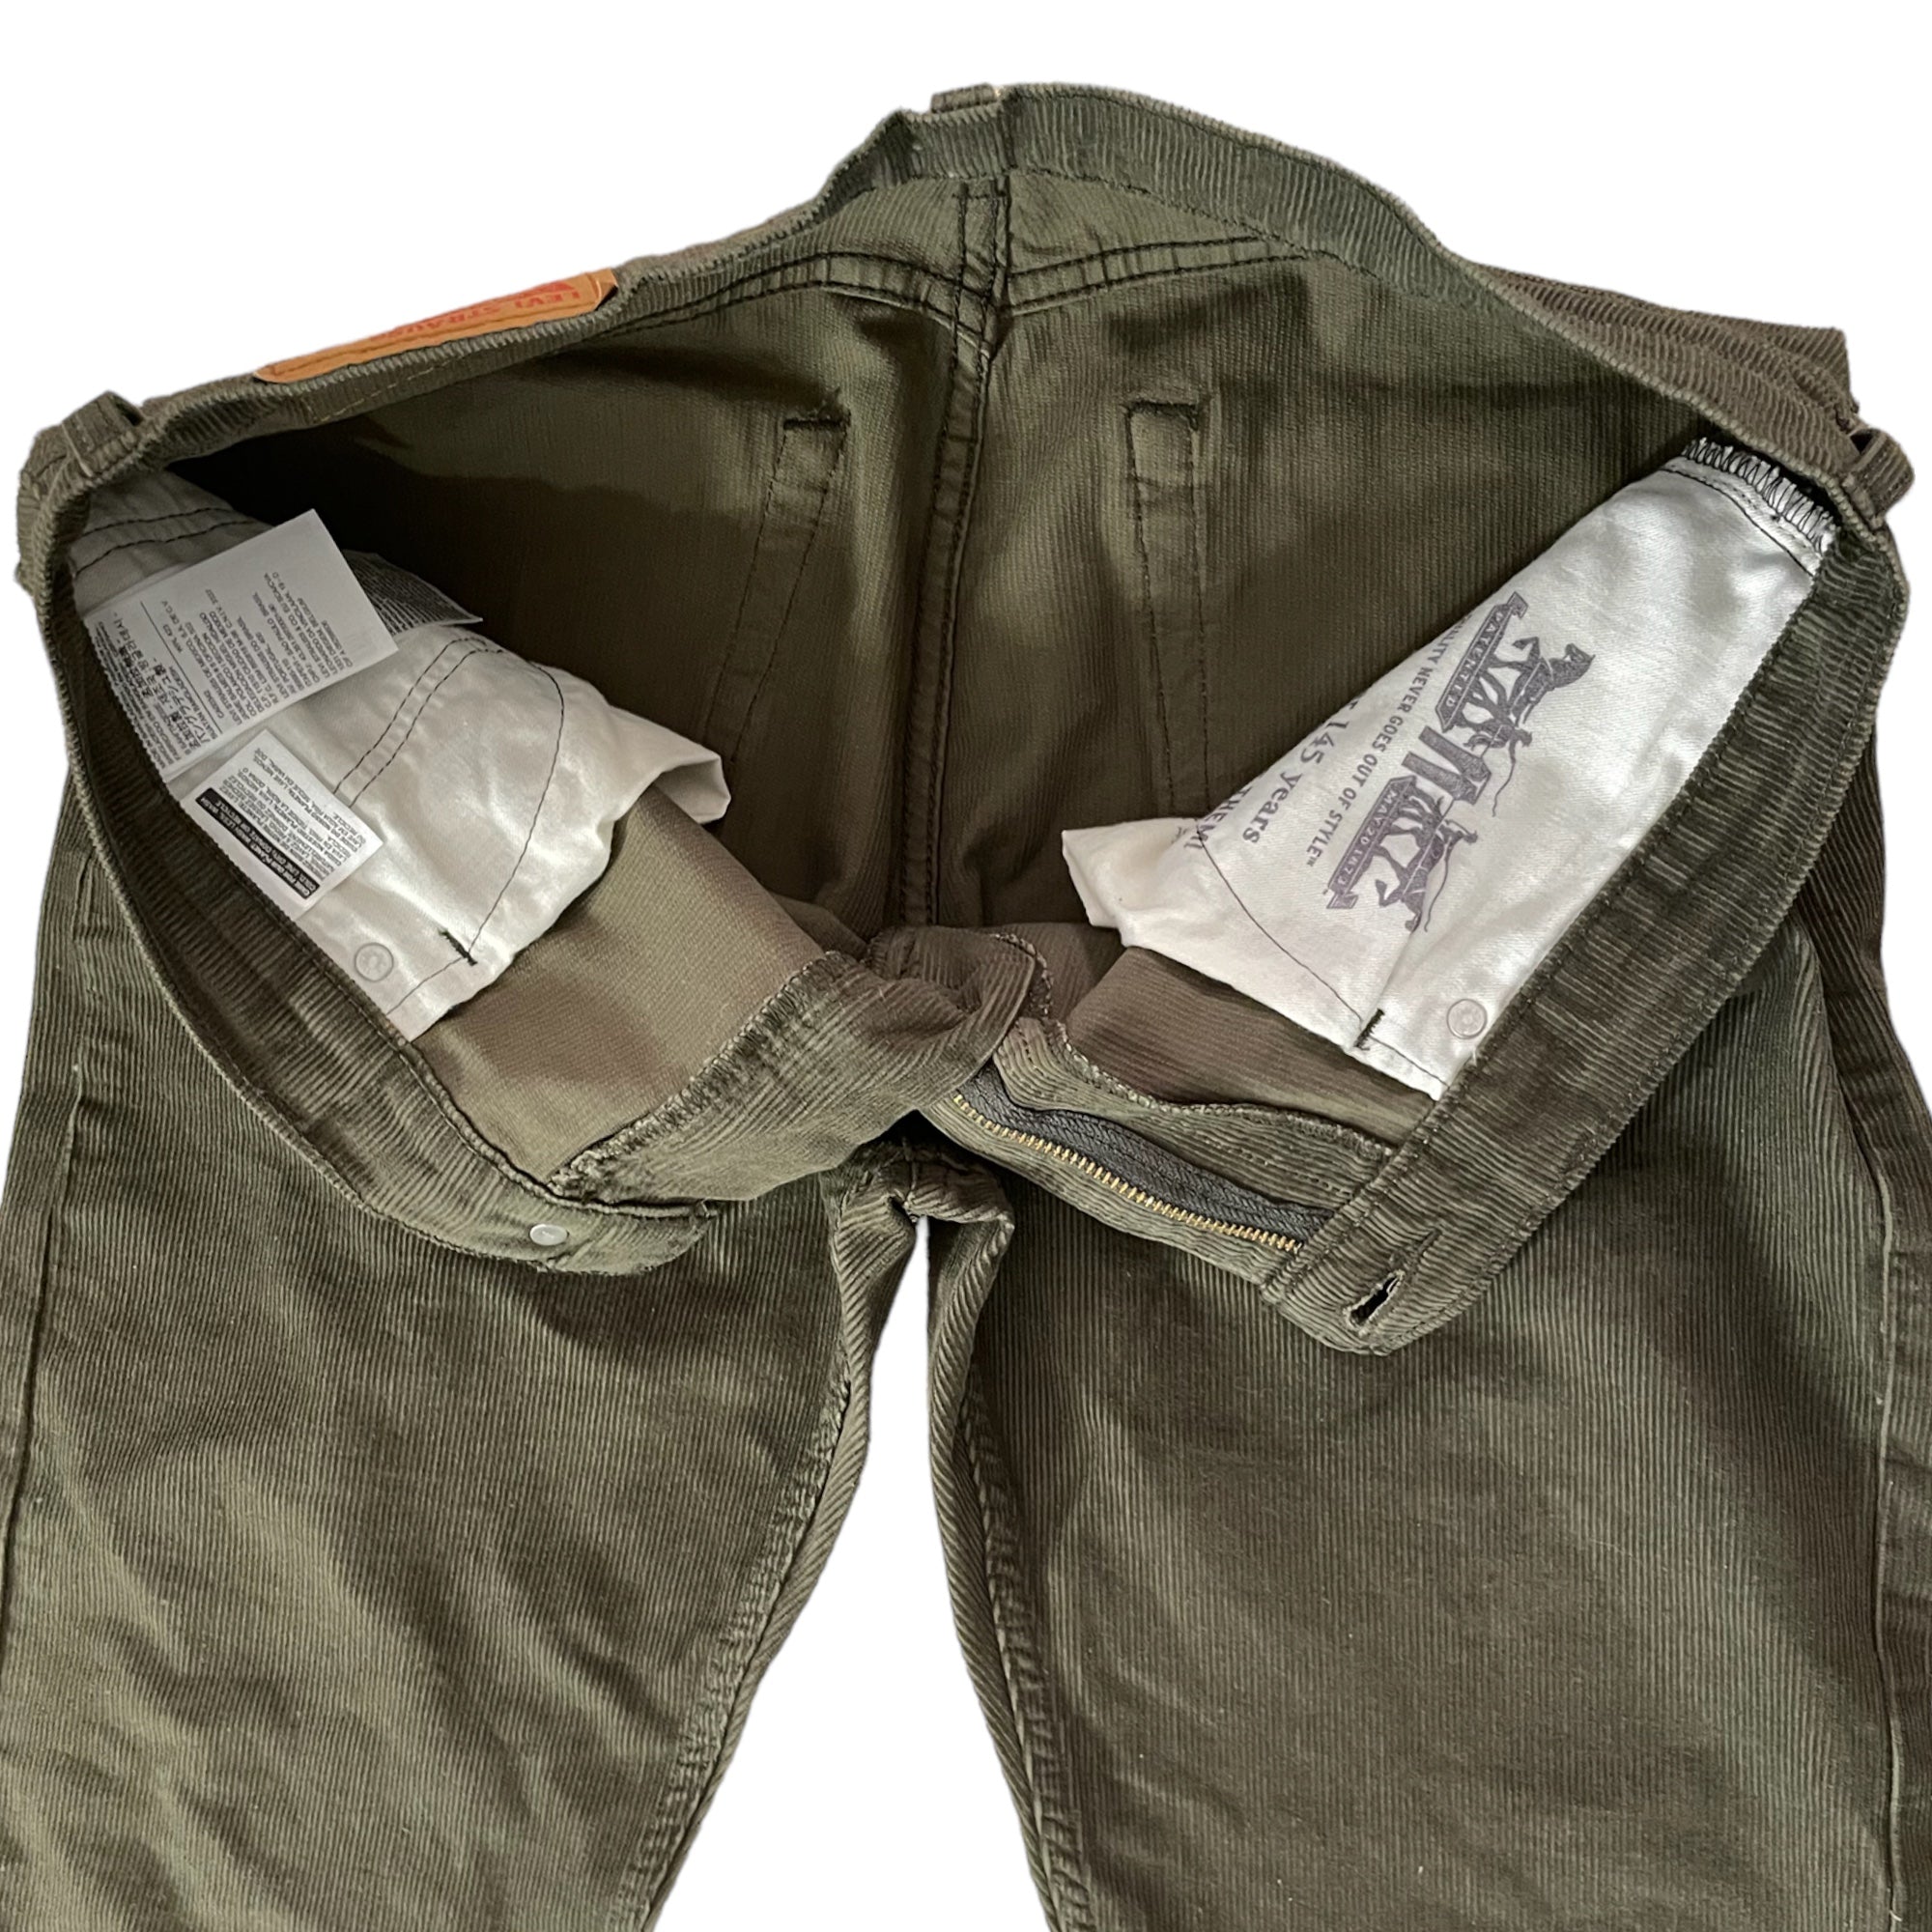 LEVI’S 502 Corduroy Pants |Size: 32 x 32|